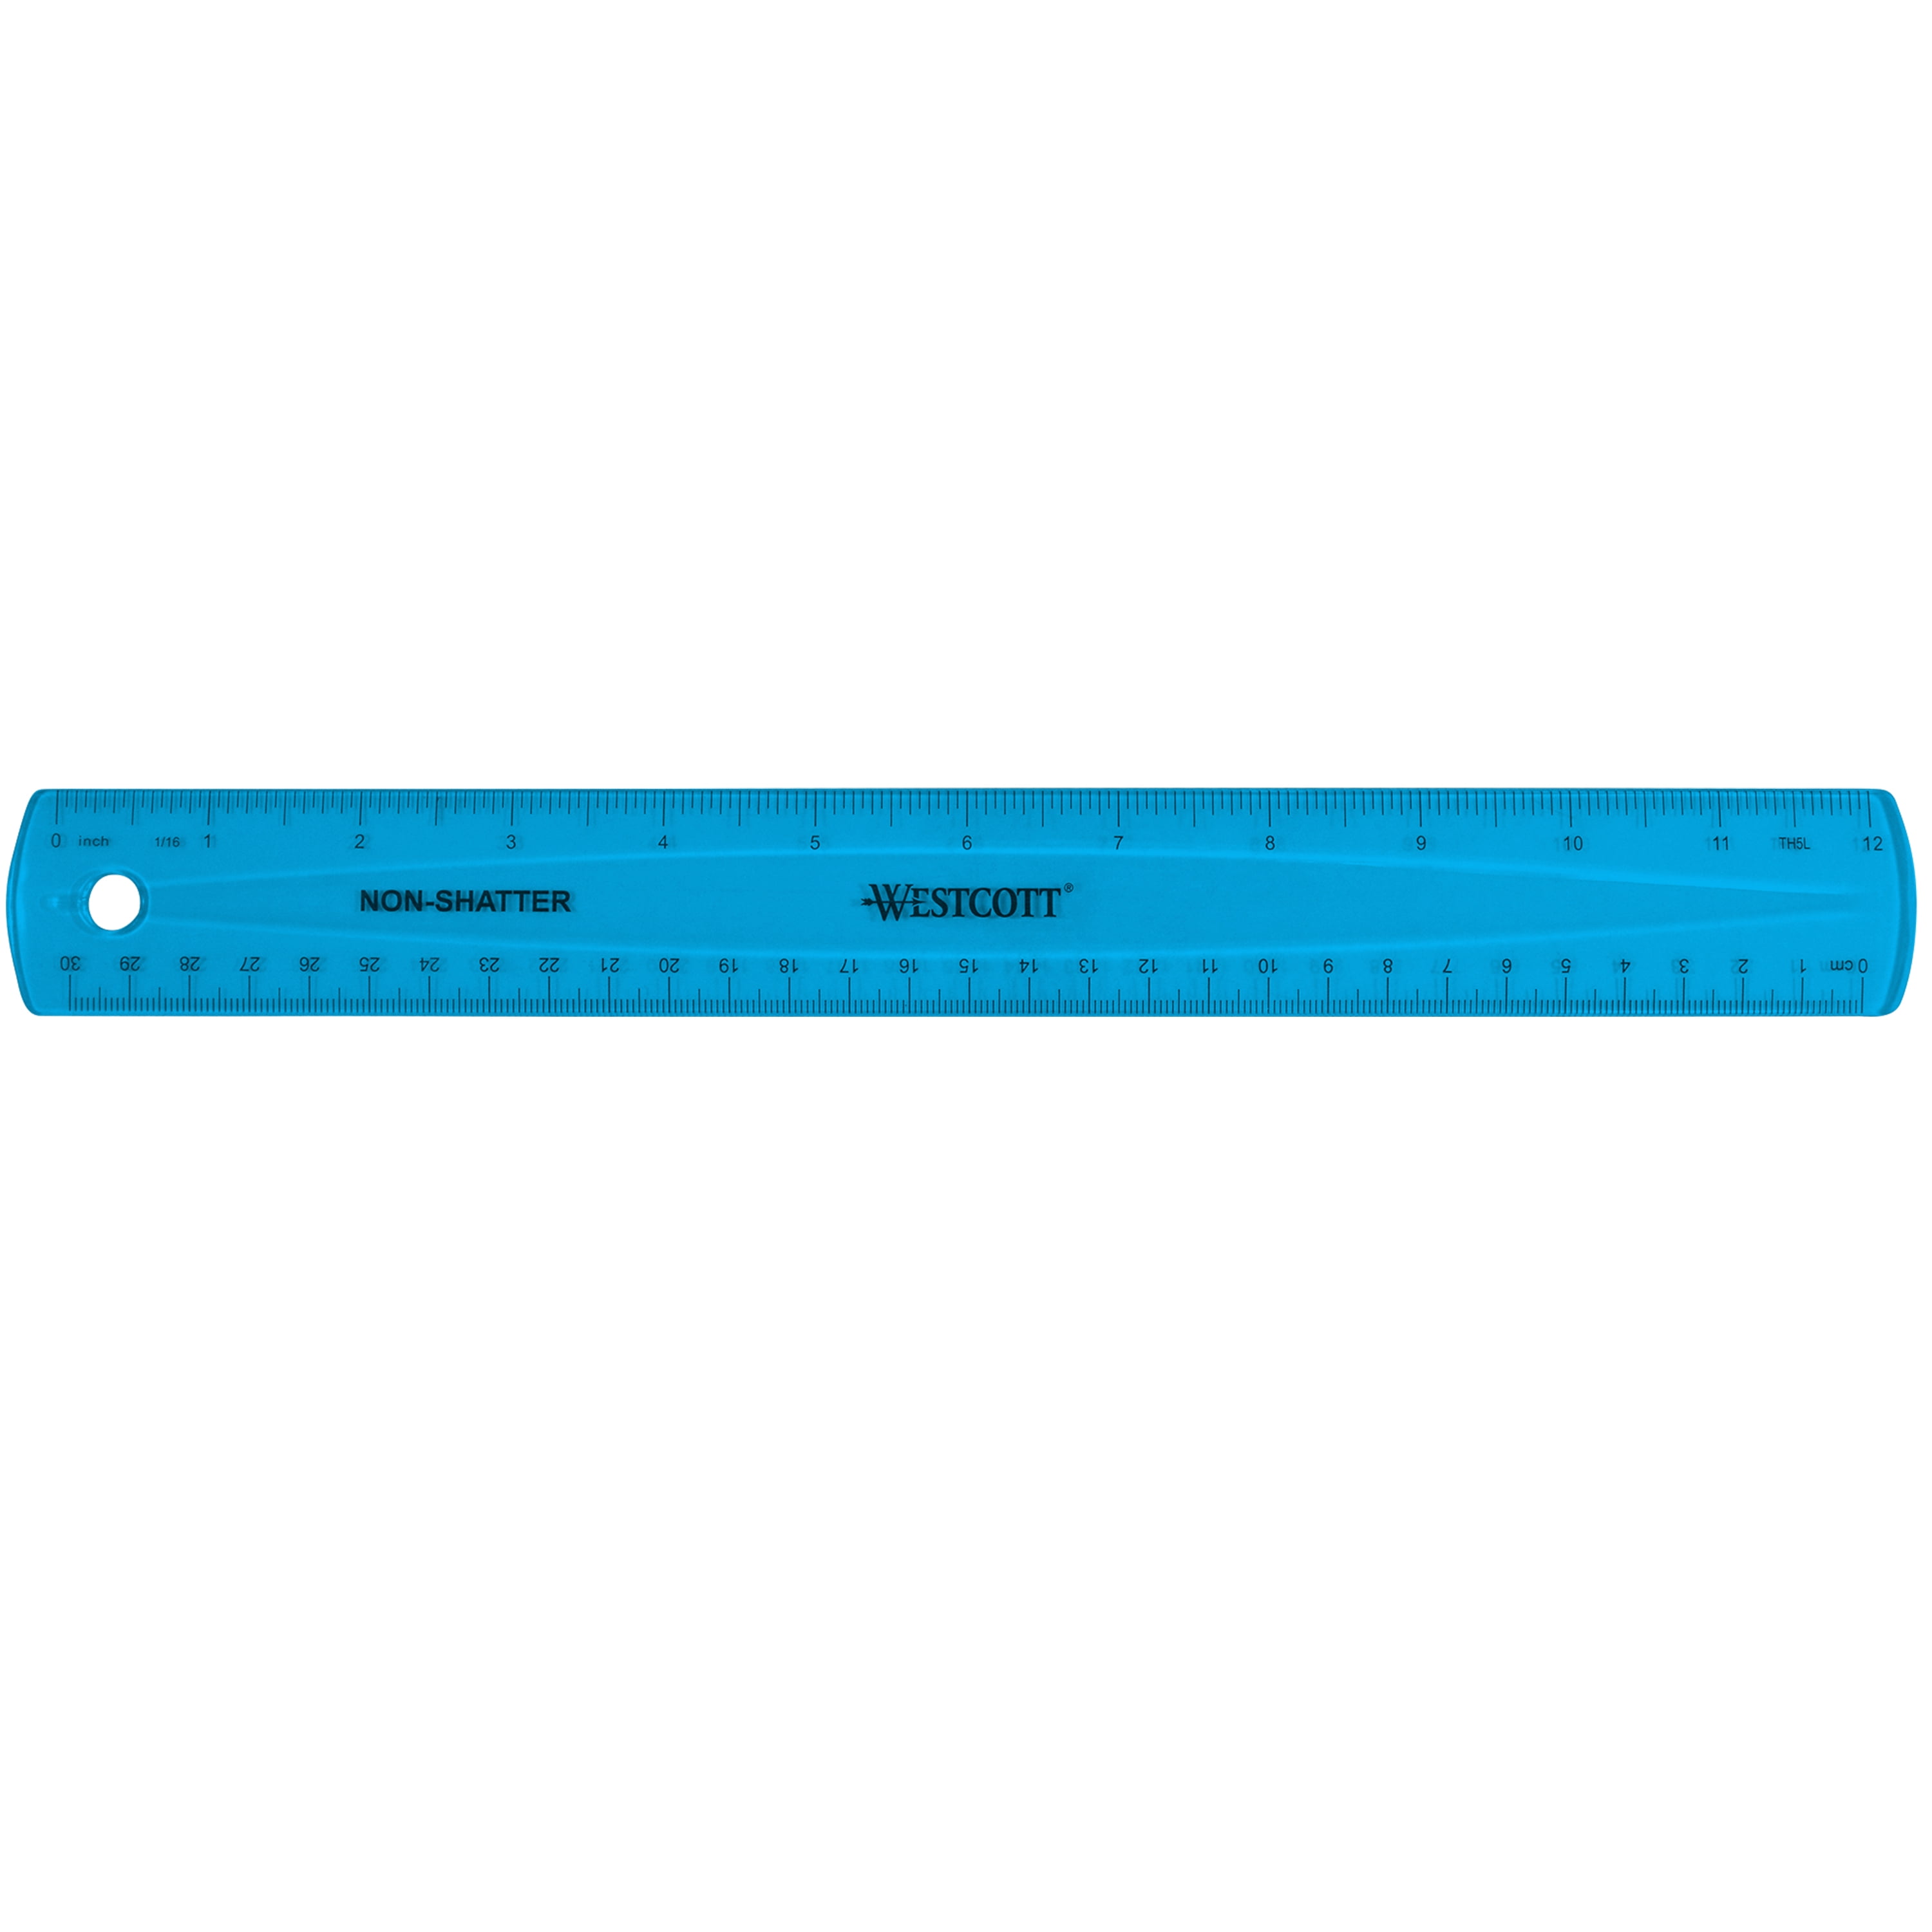 Fiskars Metal Ruler for Measuring, 12 Ruler, School Supplies, Metallic Blue